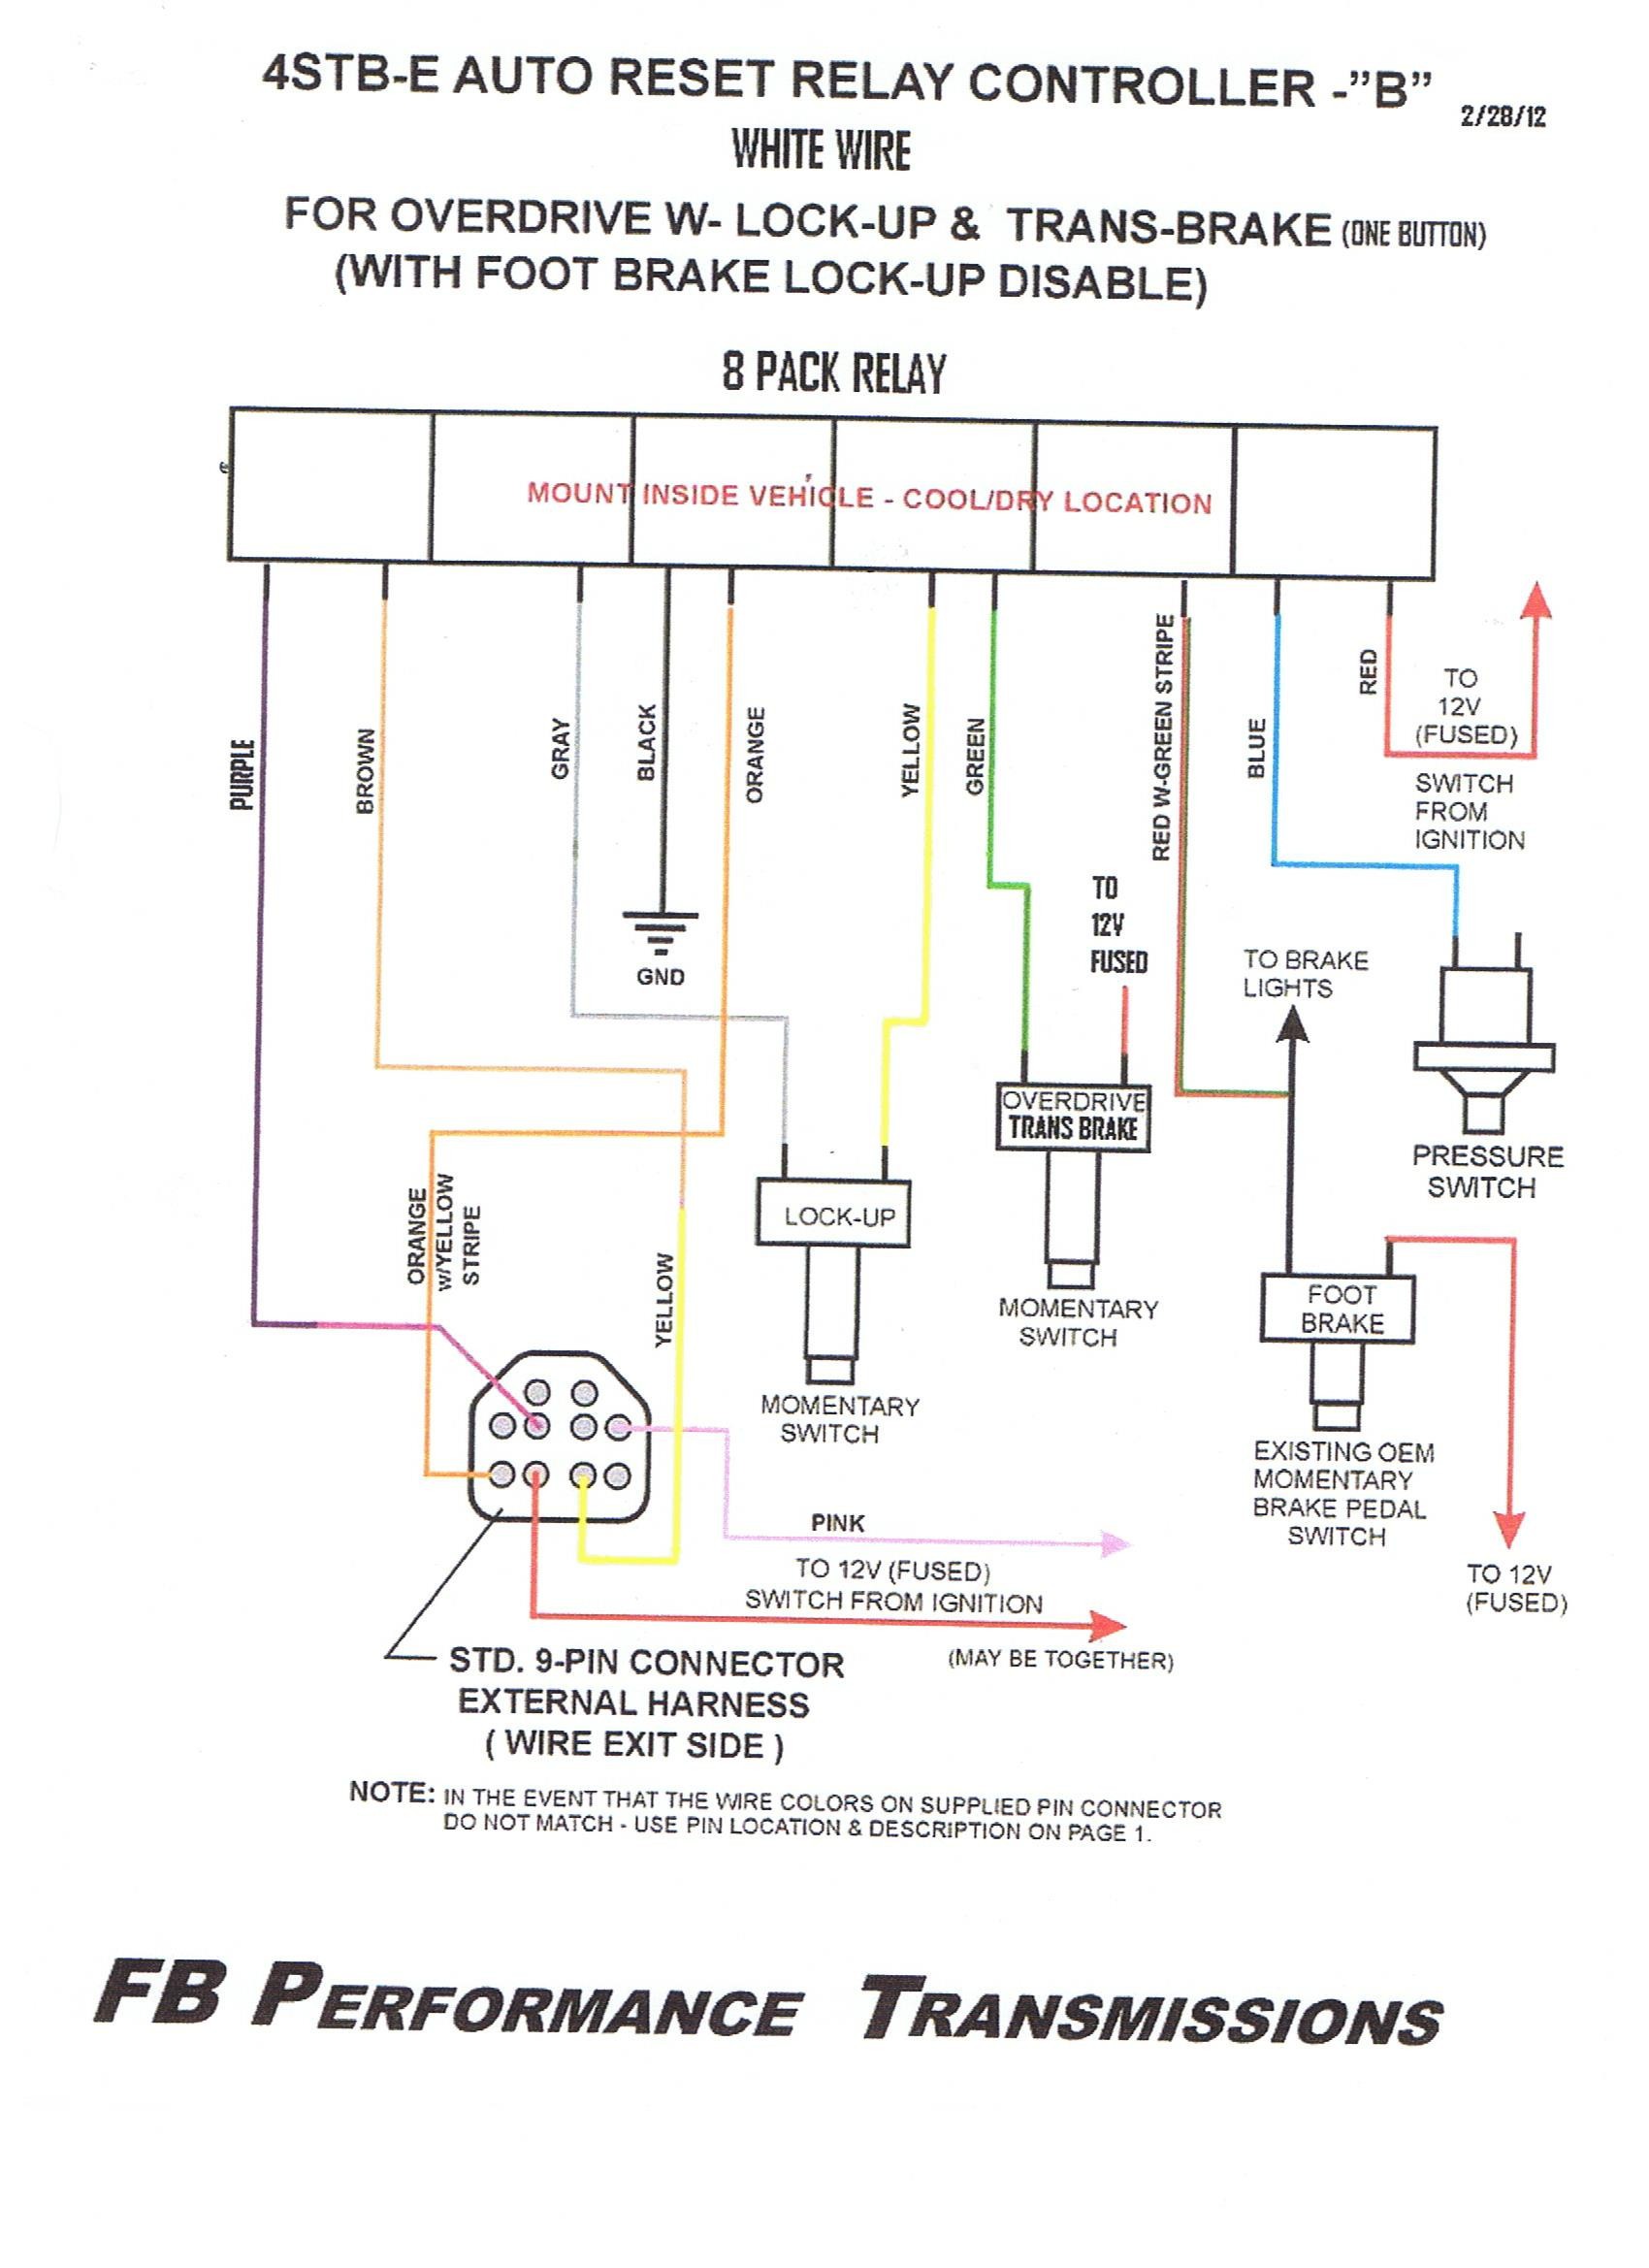 Gm Relay Wiring Diagram Fresh Gm Overdrive Relay Wire Diagram Example Electrical Wiring Diagram •